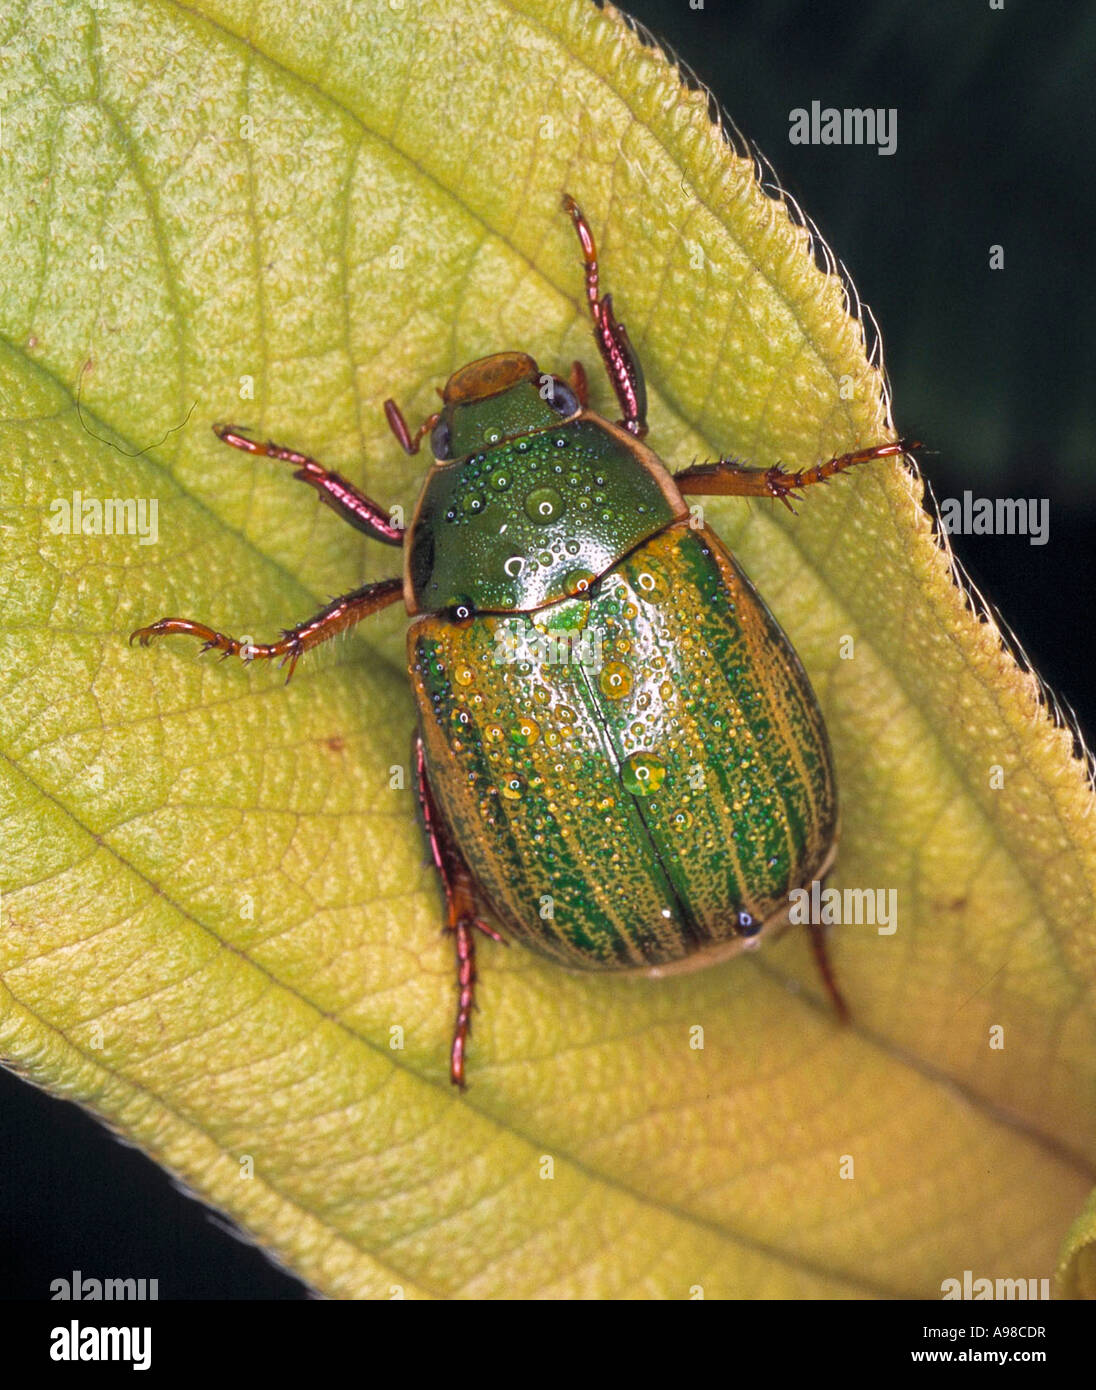 Anomala sp chafer beetle Stock Photo